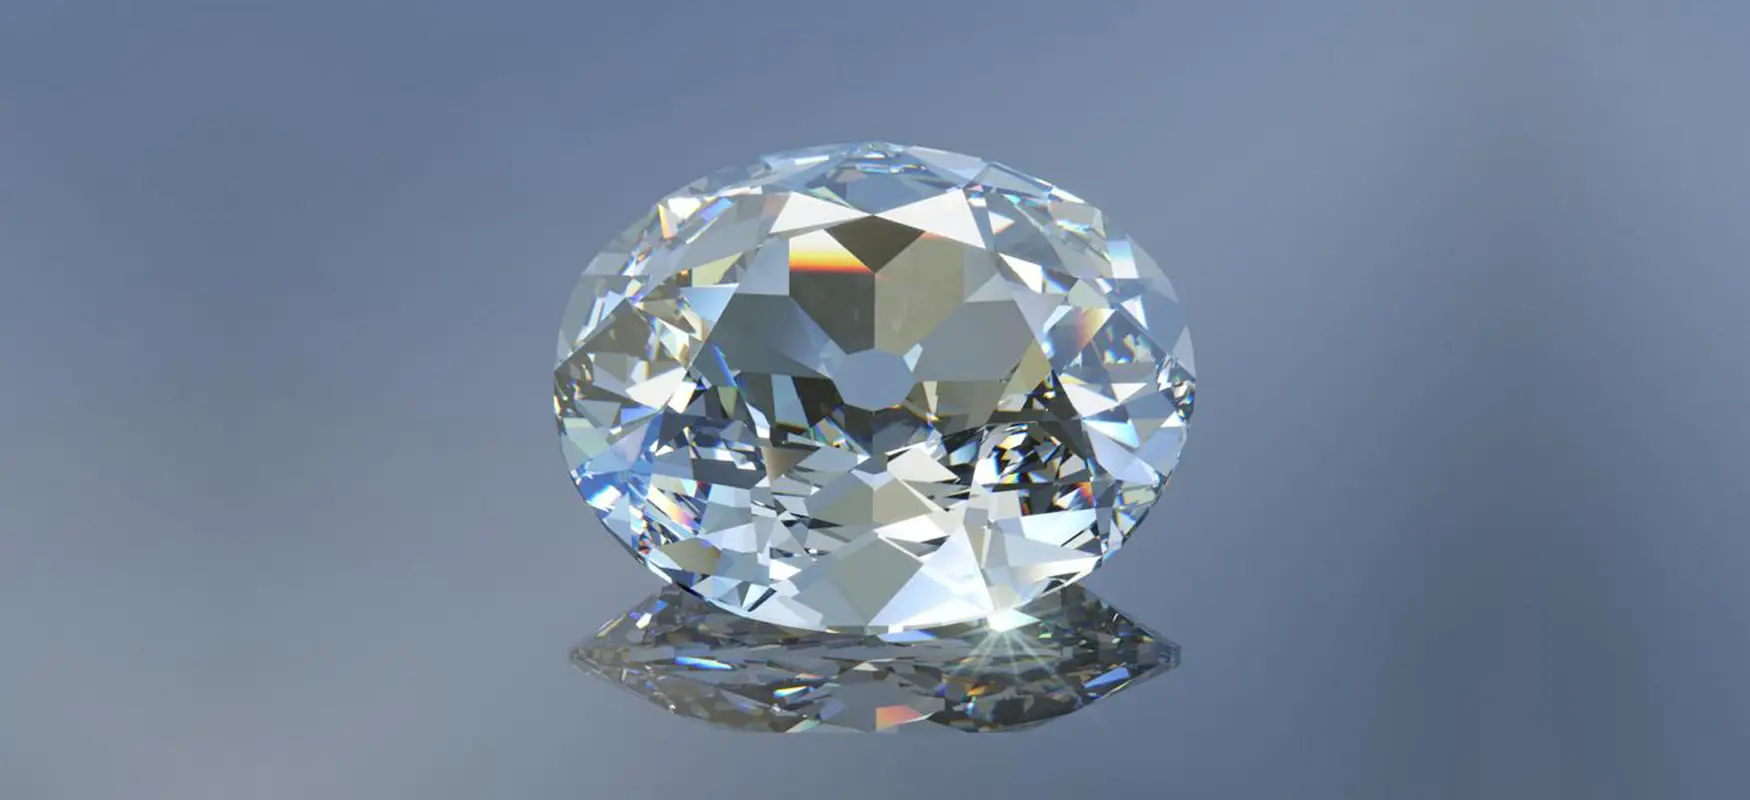 The Koh-i-noor Diamond